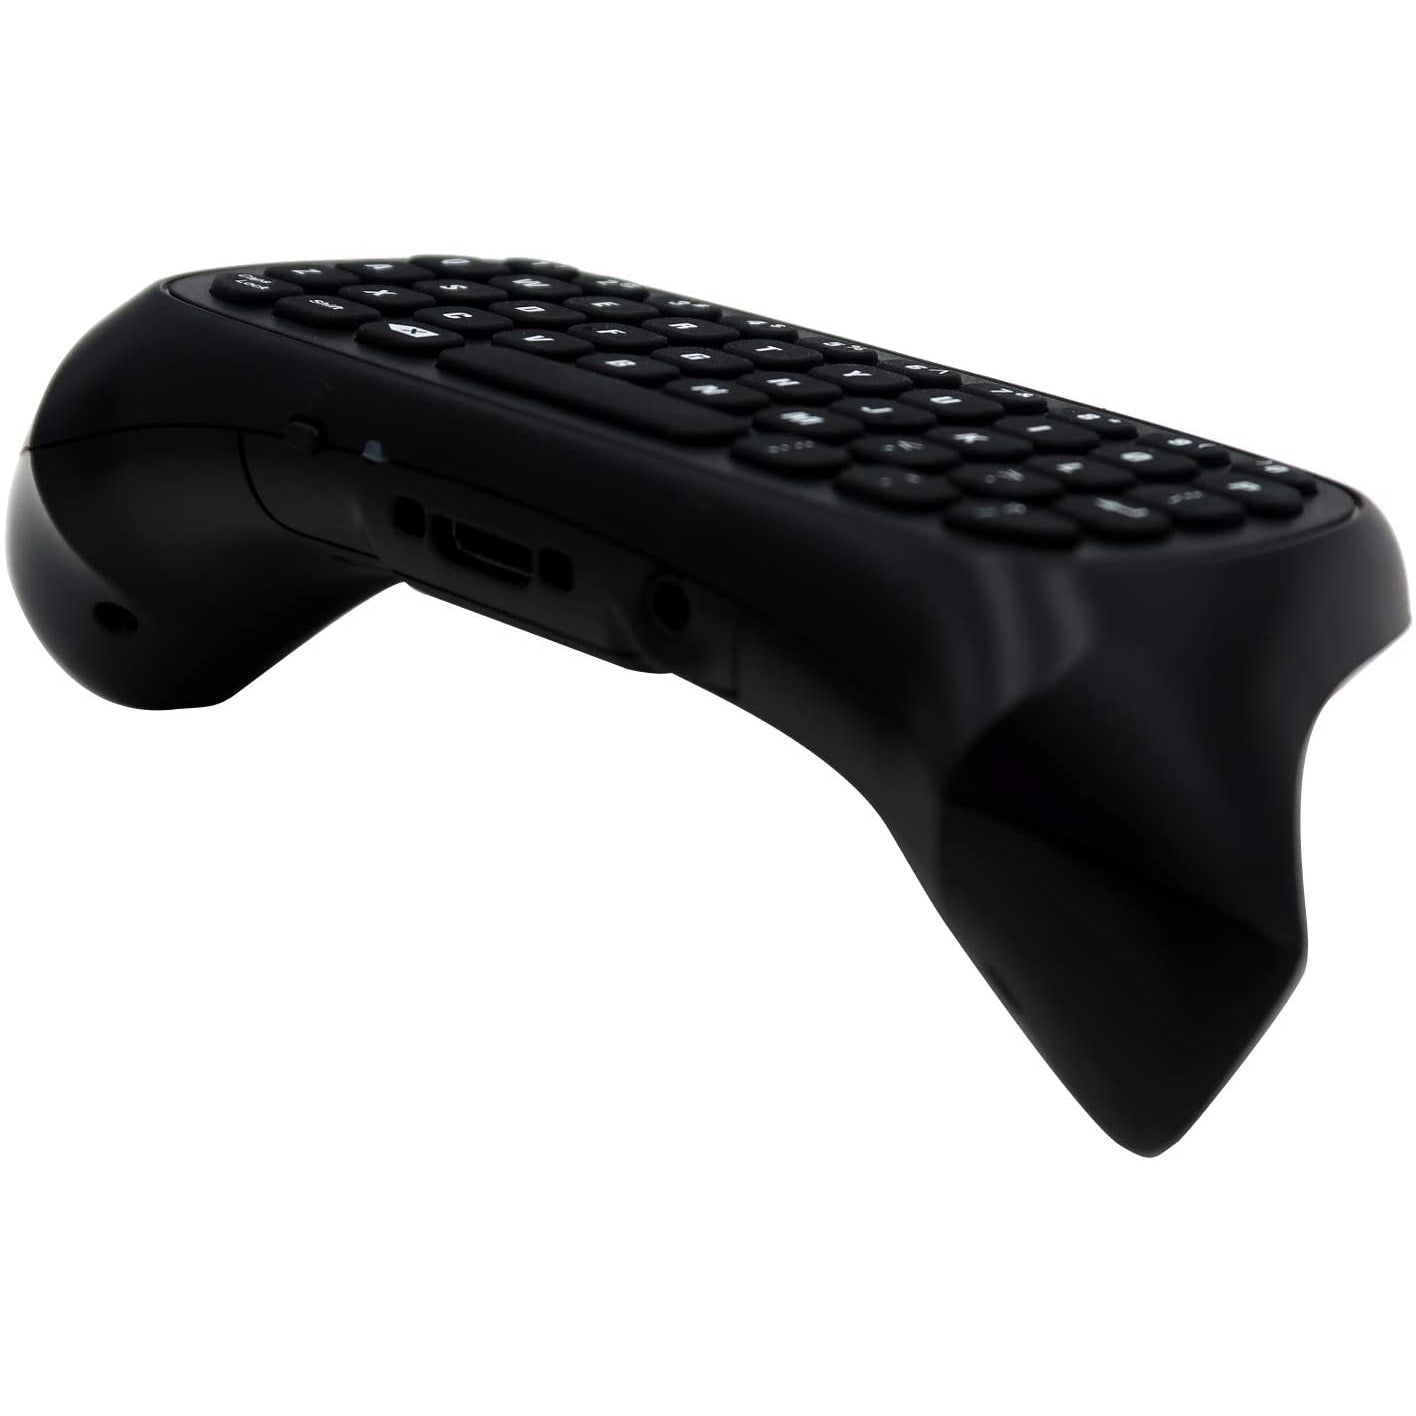 Dobe Wireless Mini Keyboard for Xbox One Controller